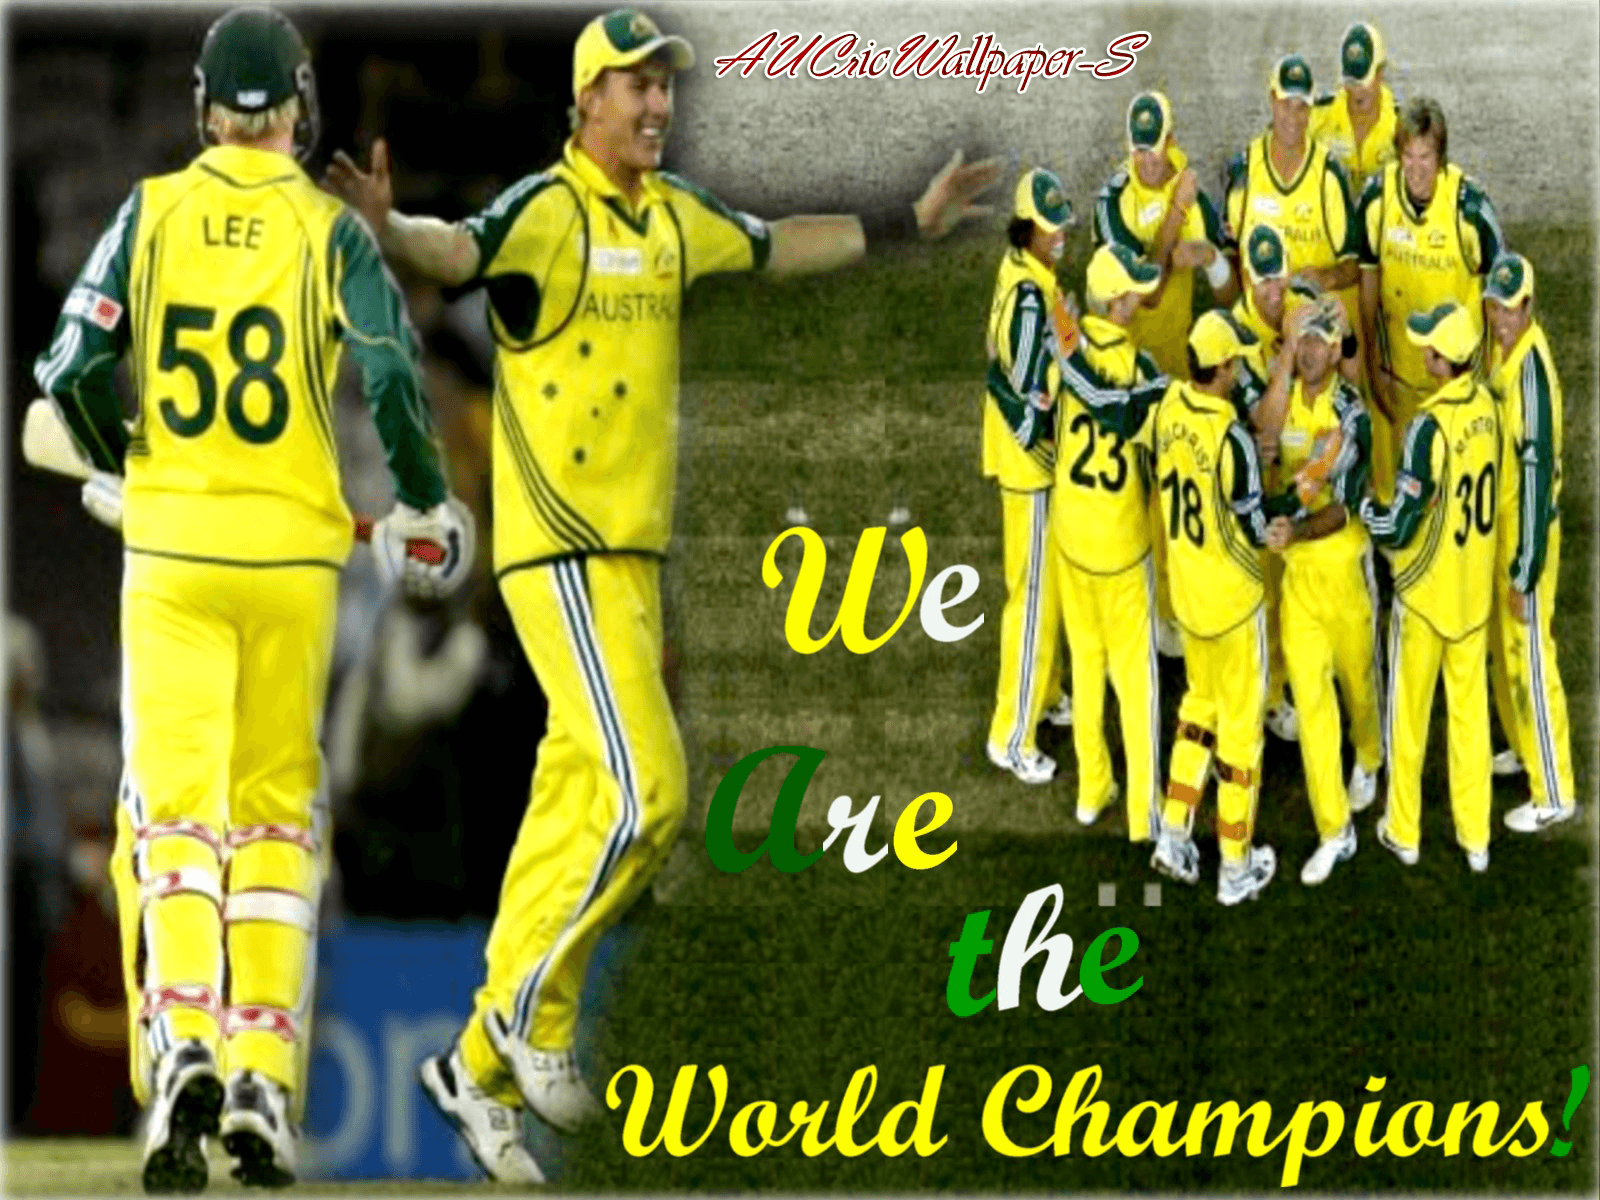 all sports wallpaper. icc world cup t20 2012, Australia cricket team wallpaper